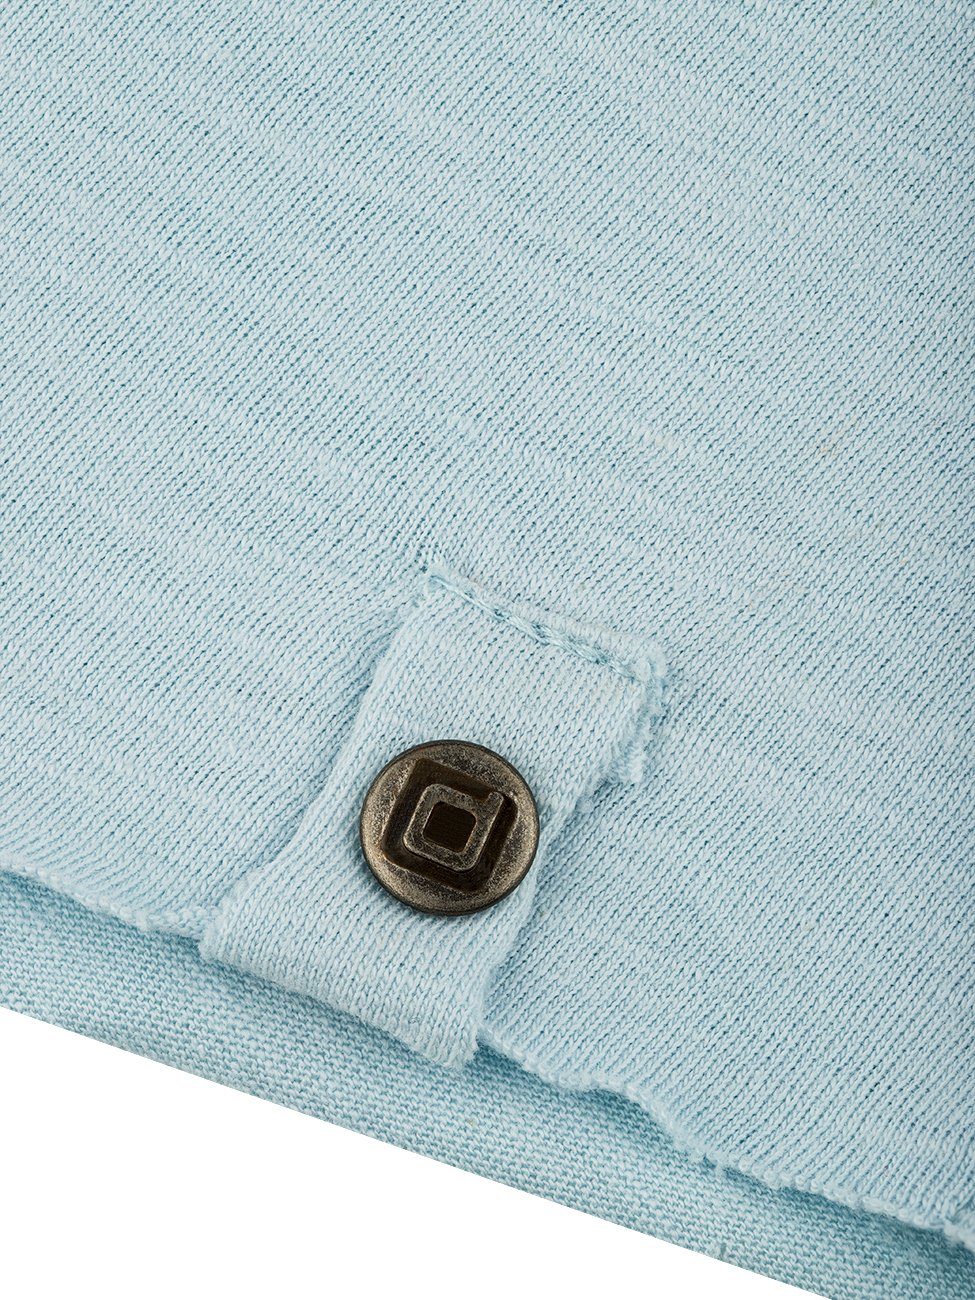 riverso T-Shirt RIVJonas Blue Light Baumwolle (19200) O-Neck (4-tlg) 100